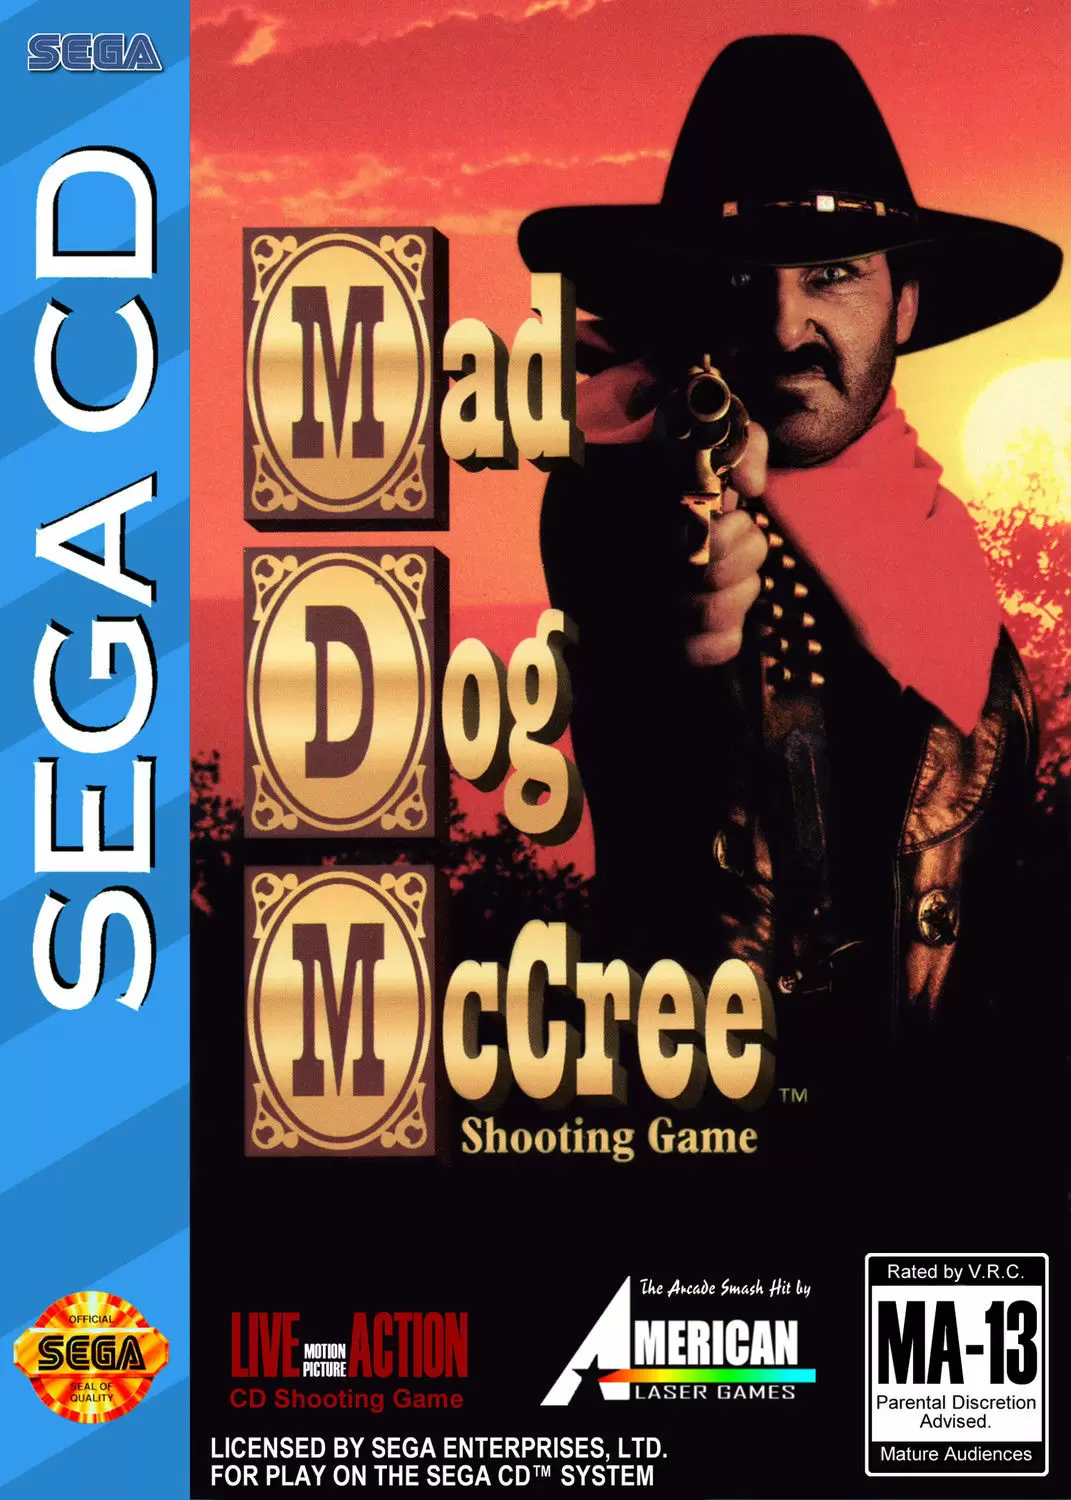 SEGA Mega CD Games - Mad Dog McCree